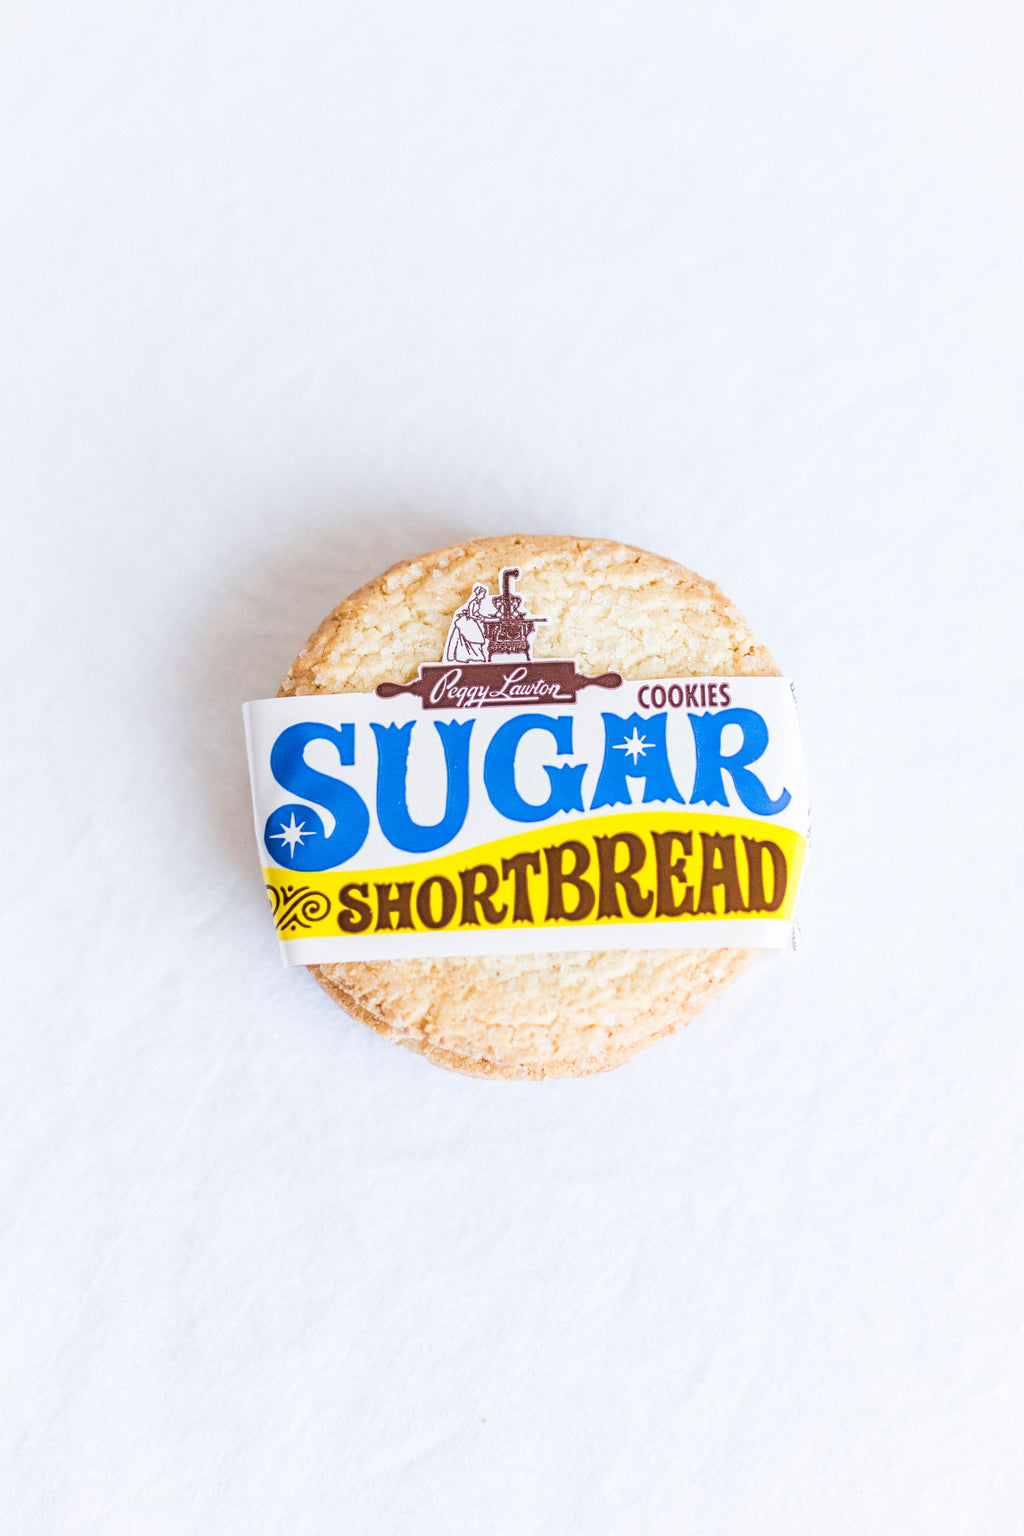 Peggy Lawton Sugar Shortbread Cookies